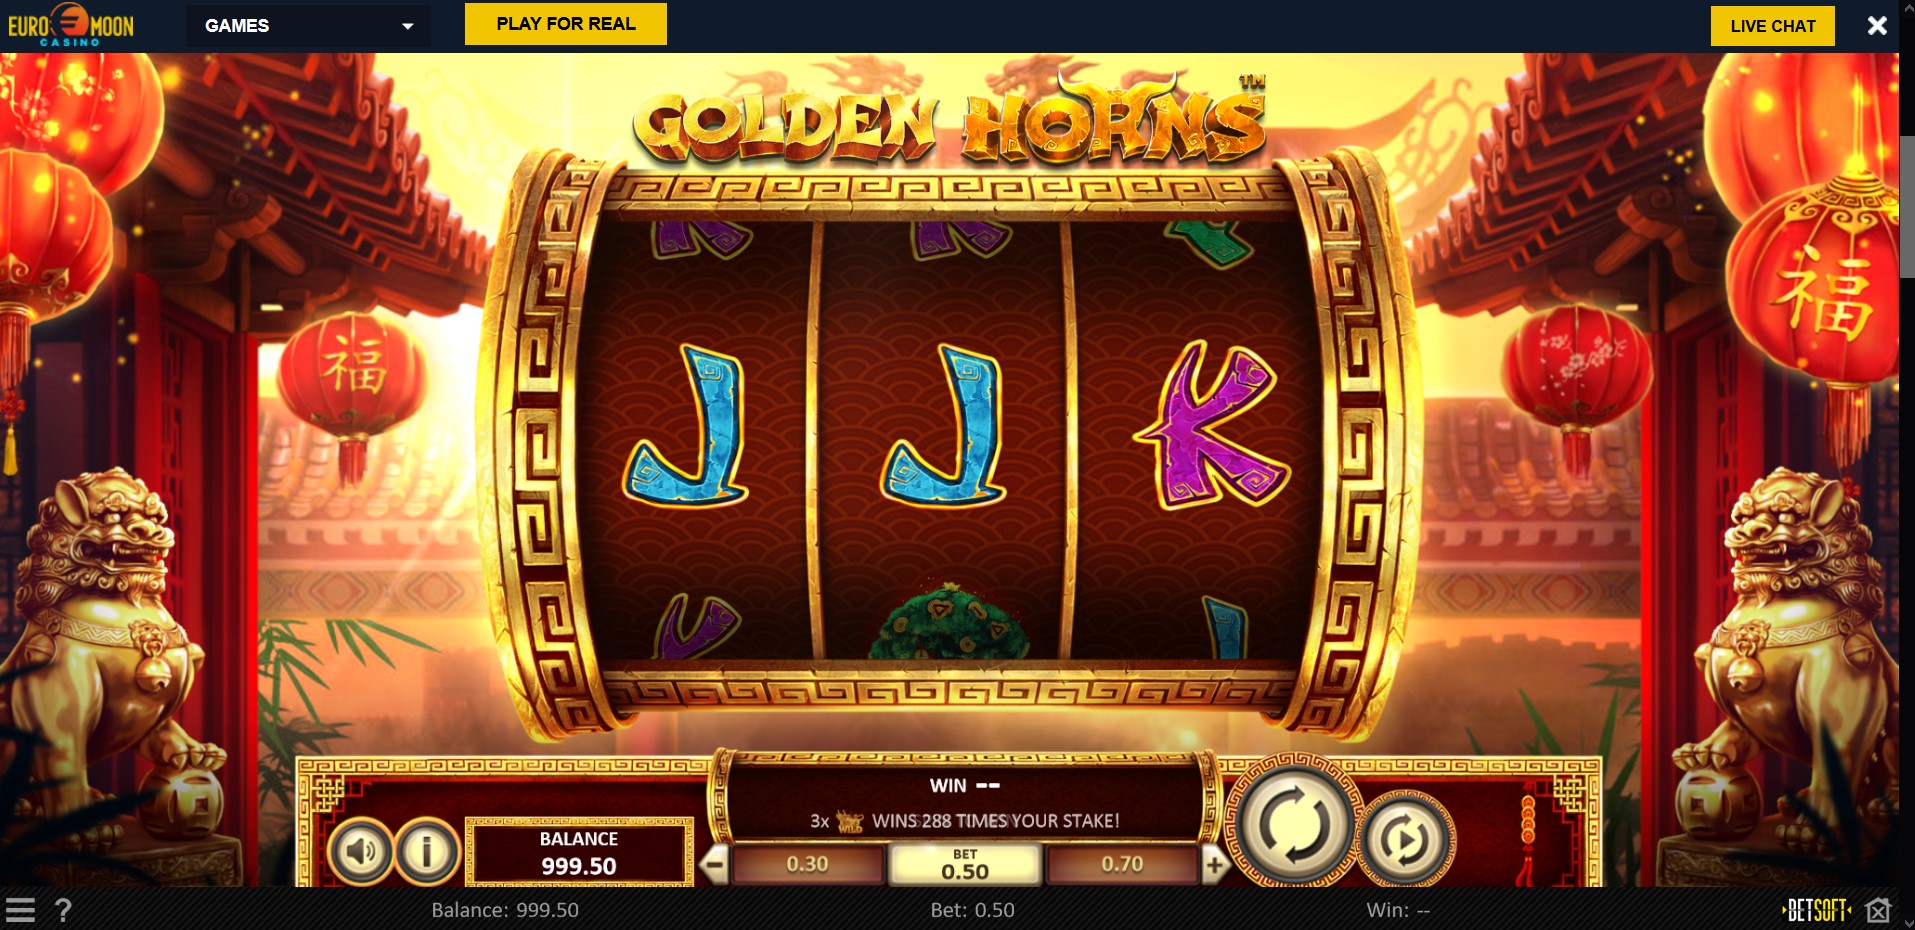 Euromoon Casino Slot Games